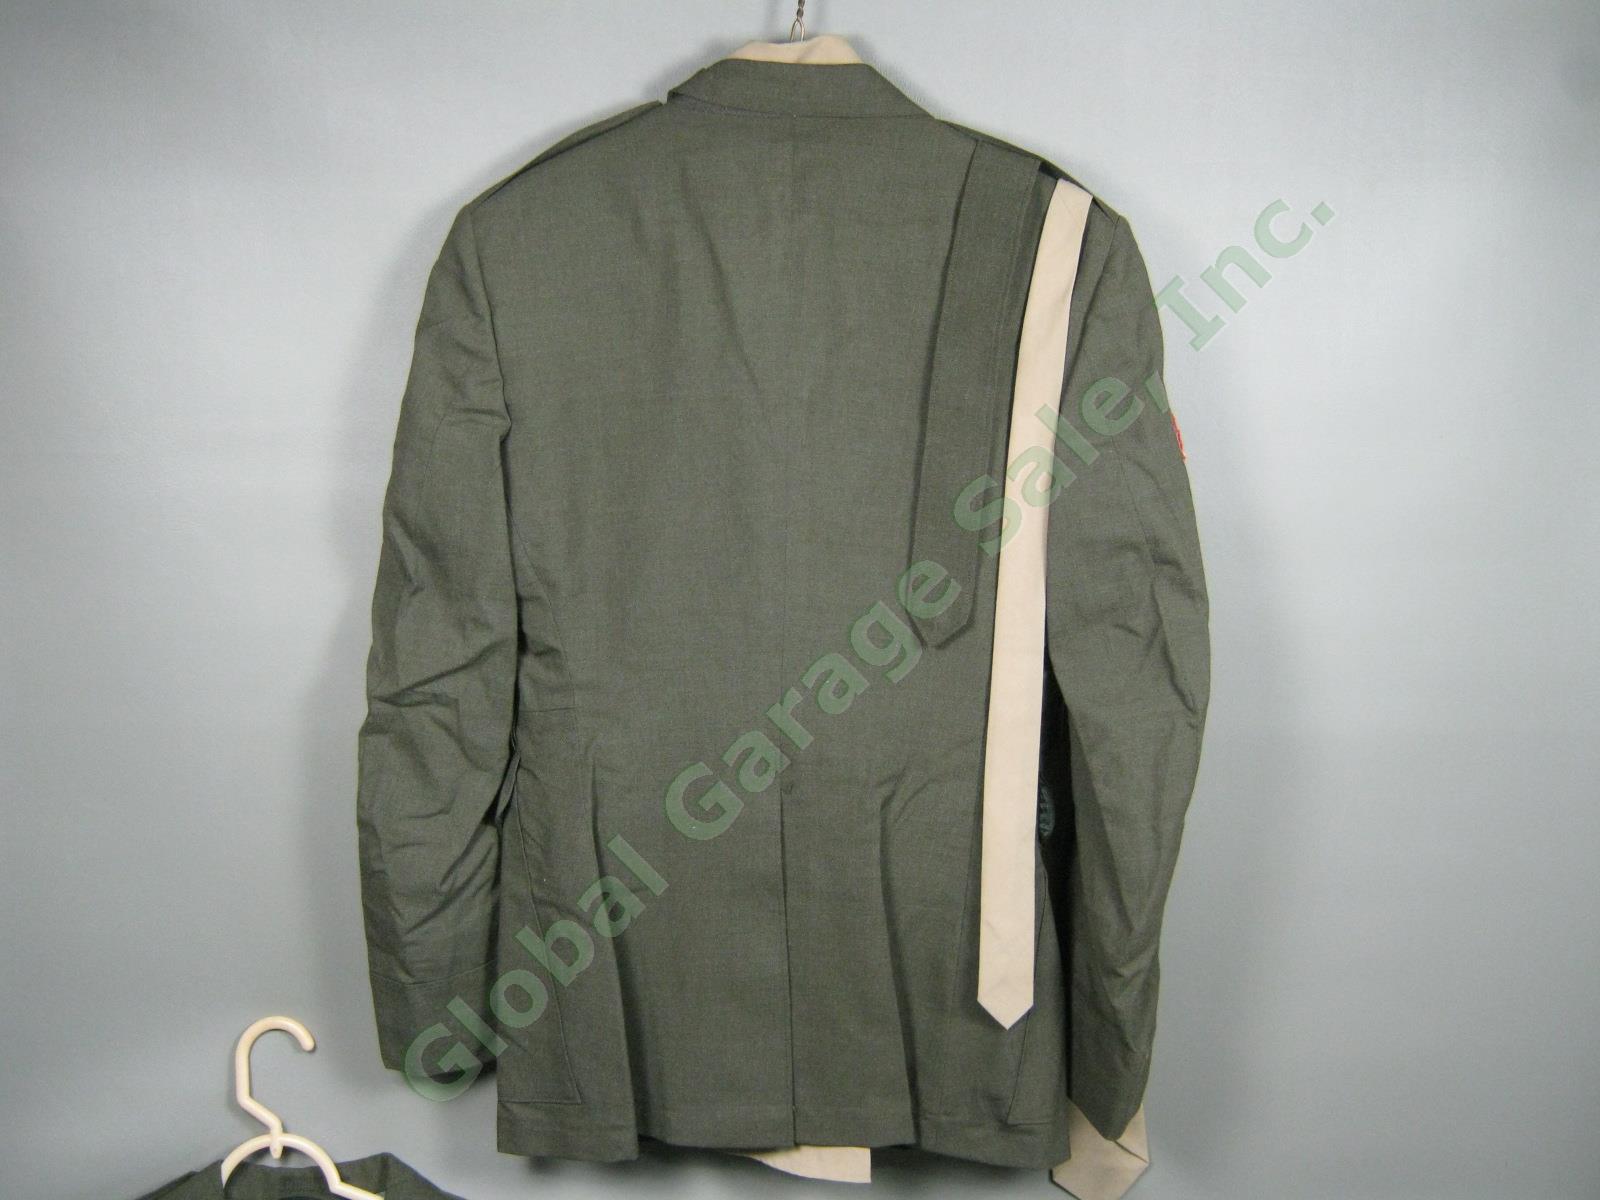 Huge USMC Marine Corps Charlie Uniform Pants Jackets Shirts Cap Lot Never Worn! 2